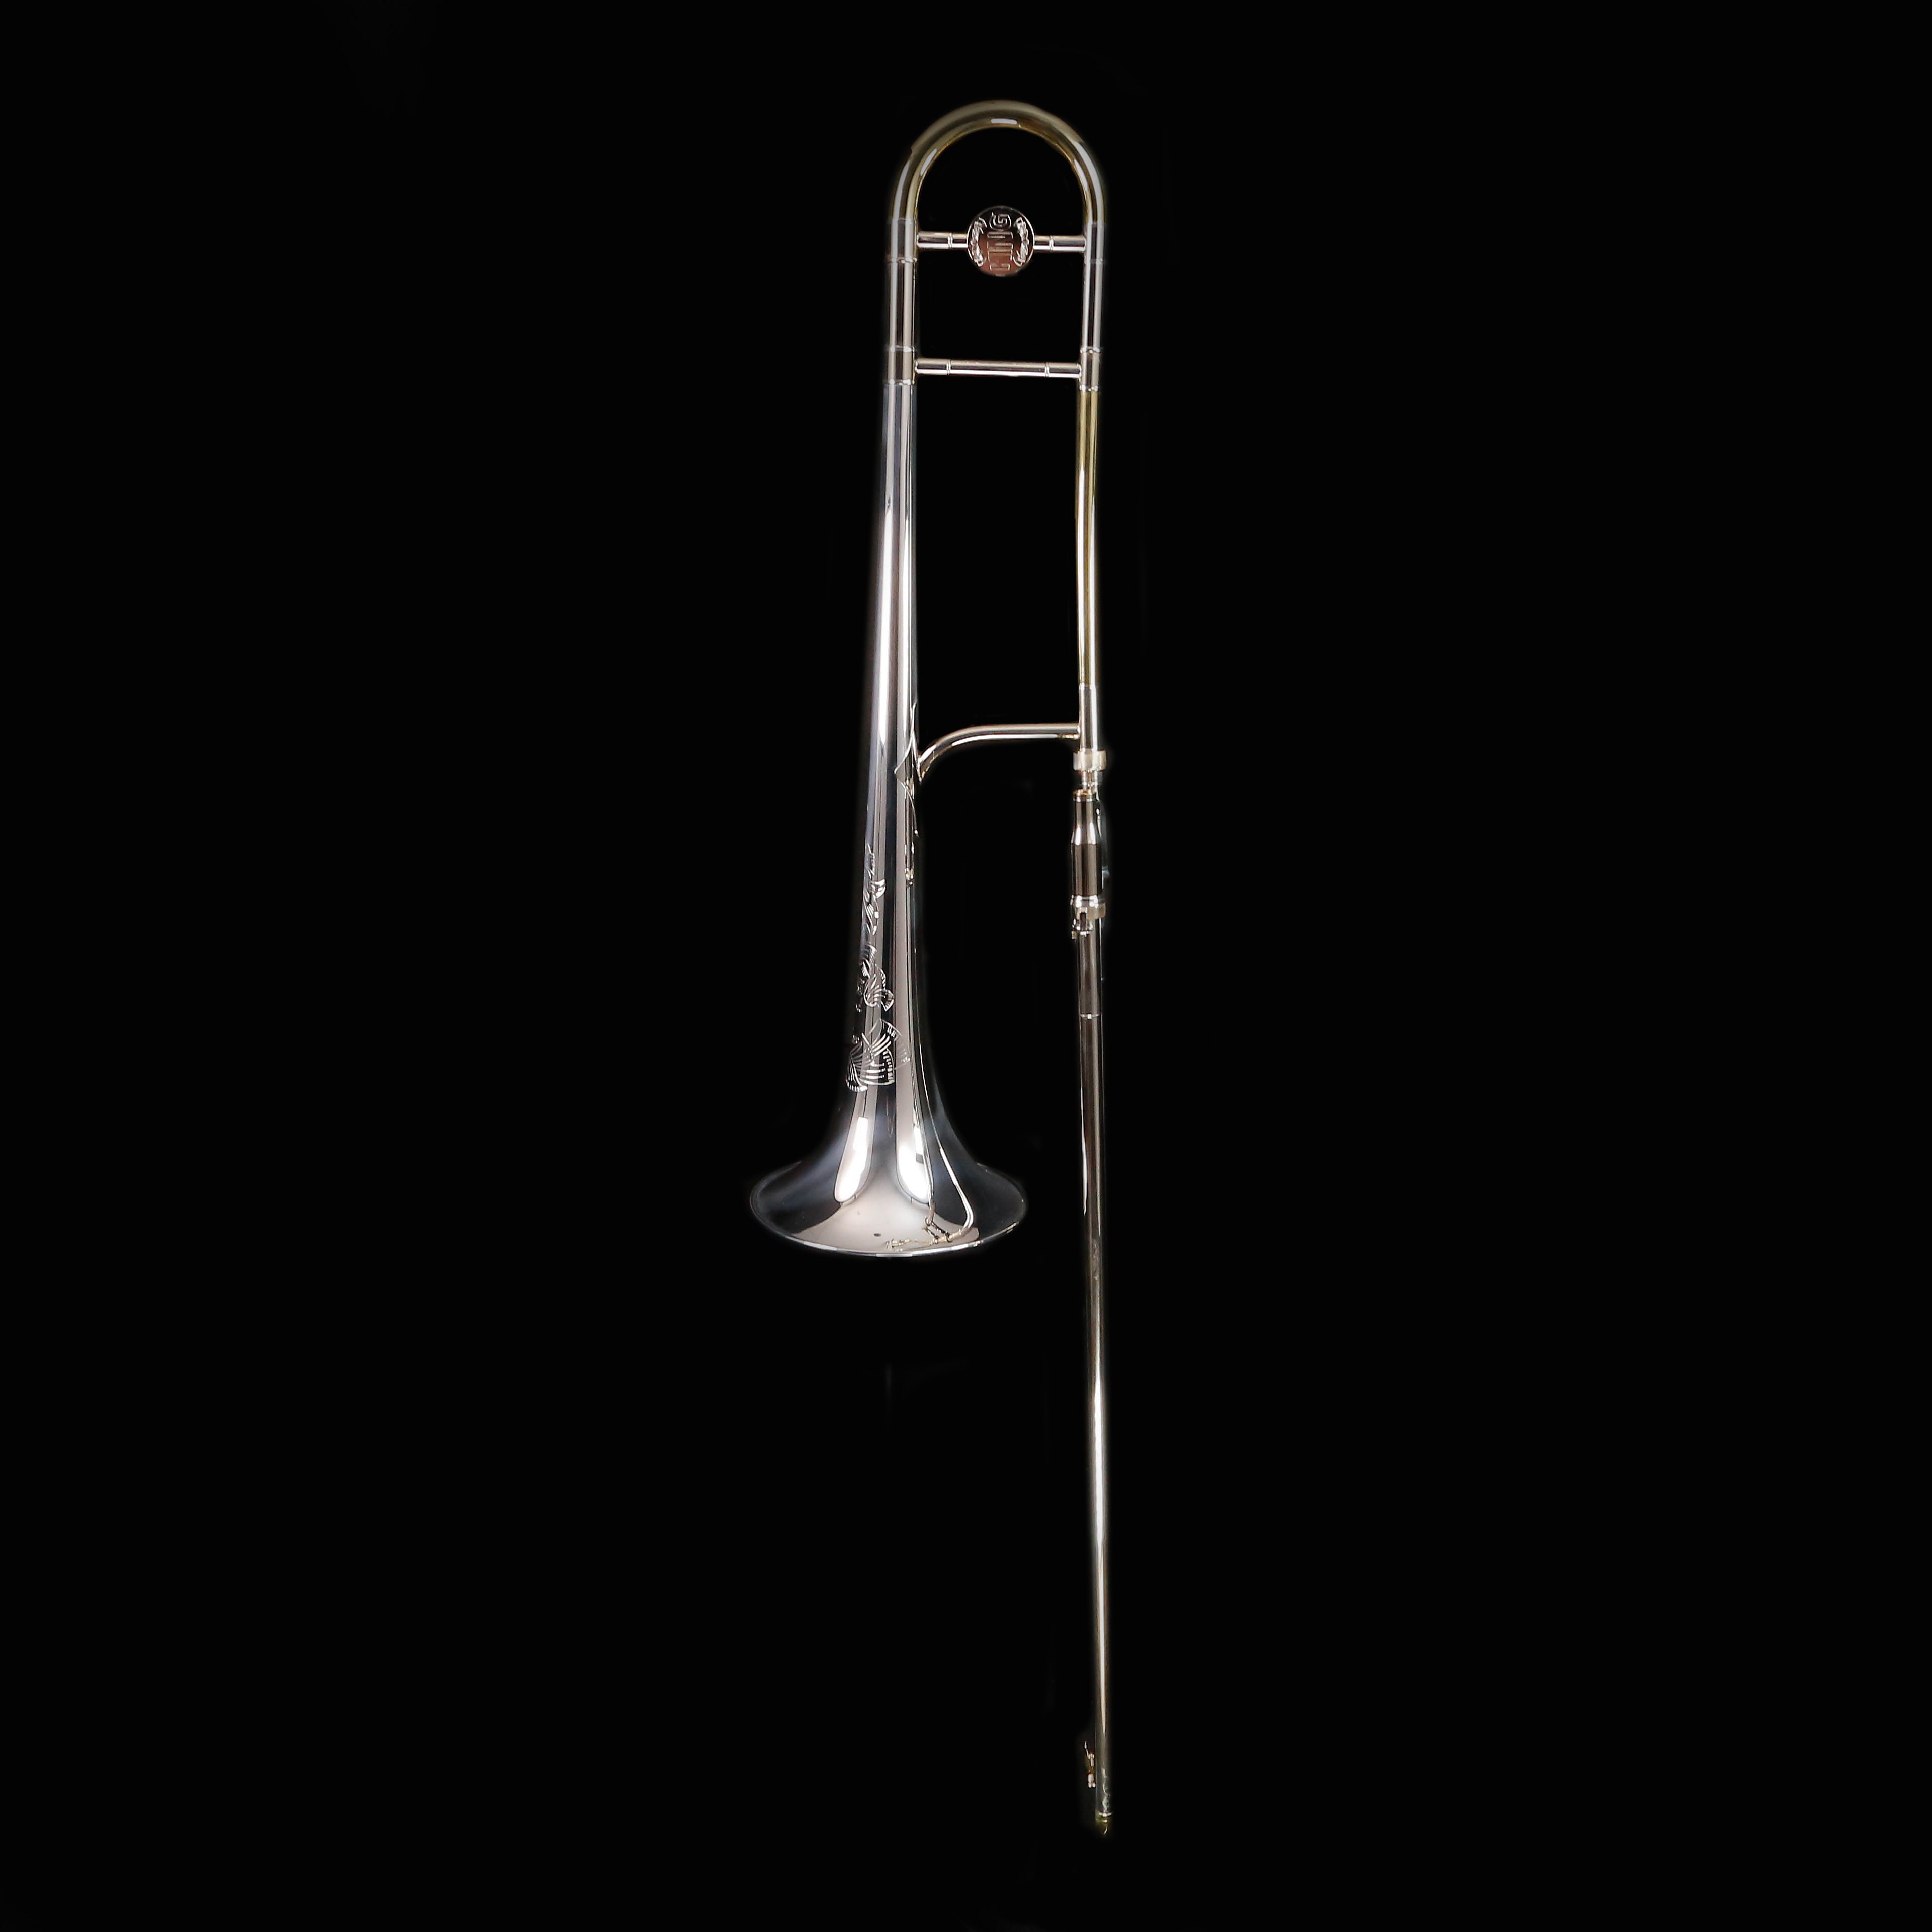 King 2BS Tenor Trombone - Professional, Sterling Silver Bell